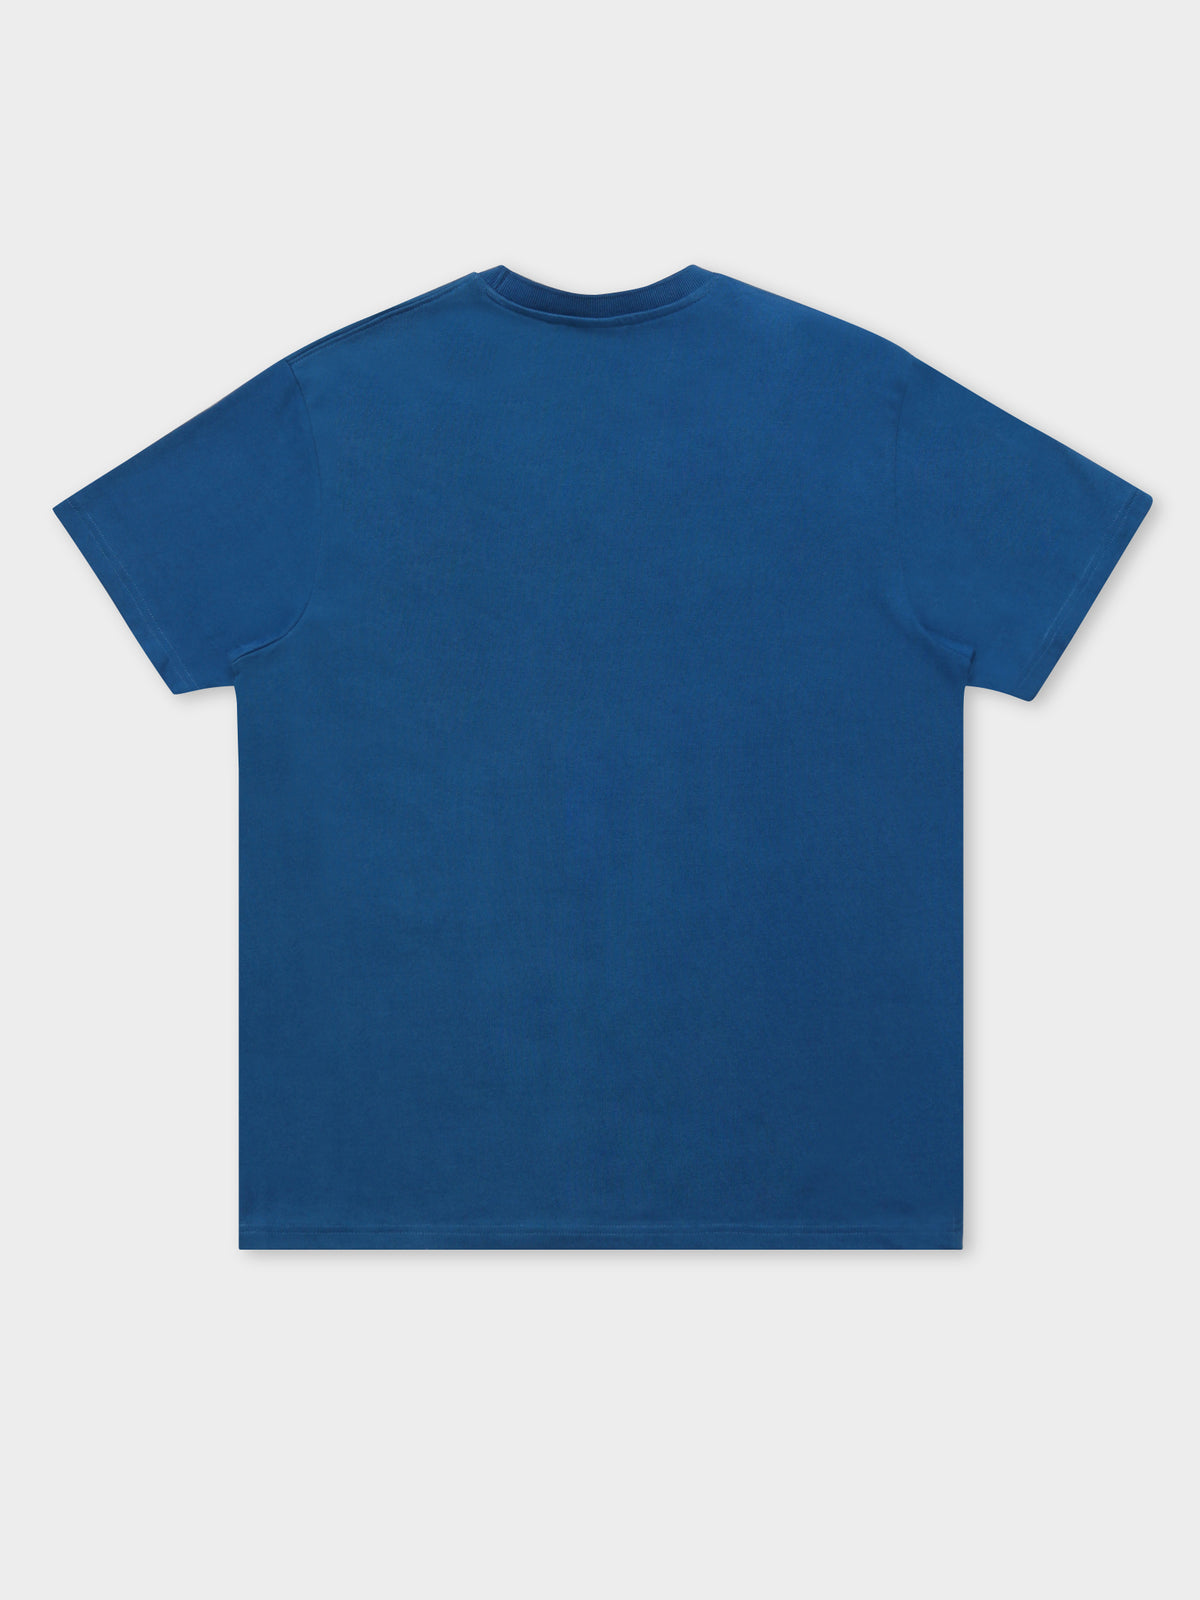 LA Baseball T-Shirt in Royal Blue